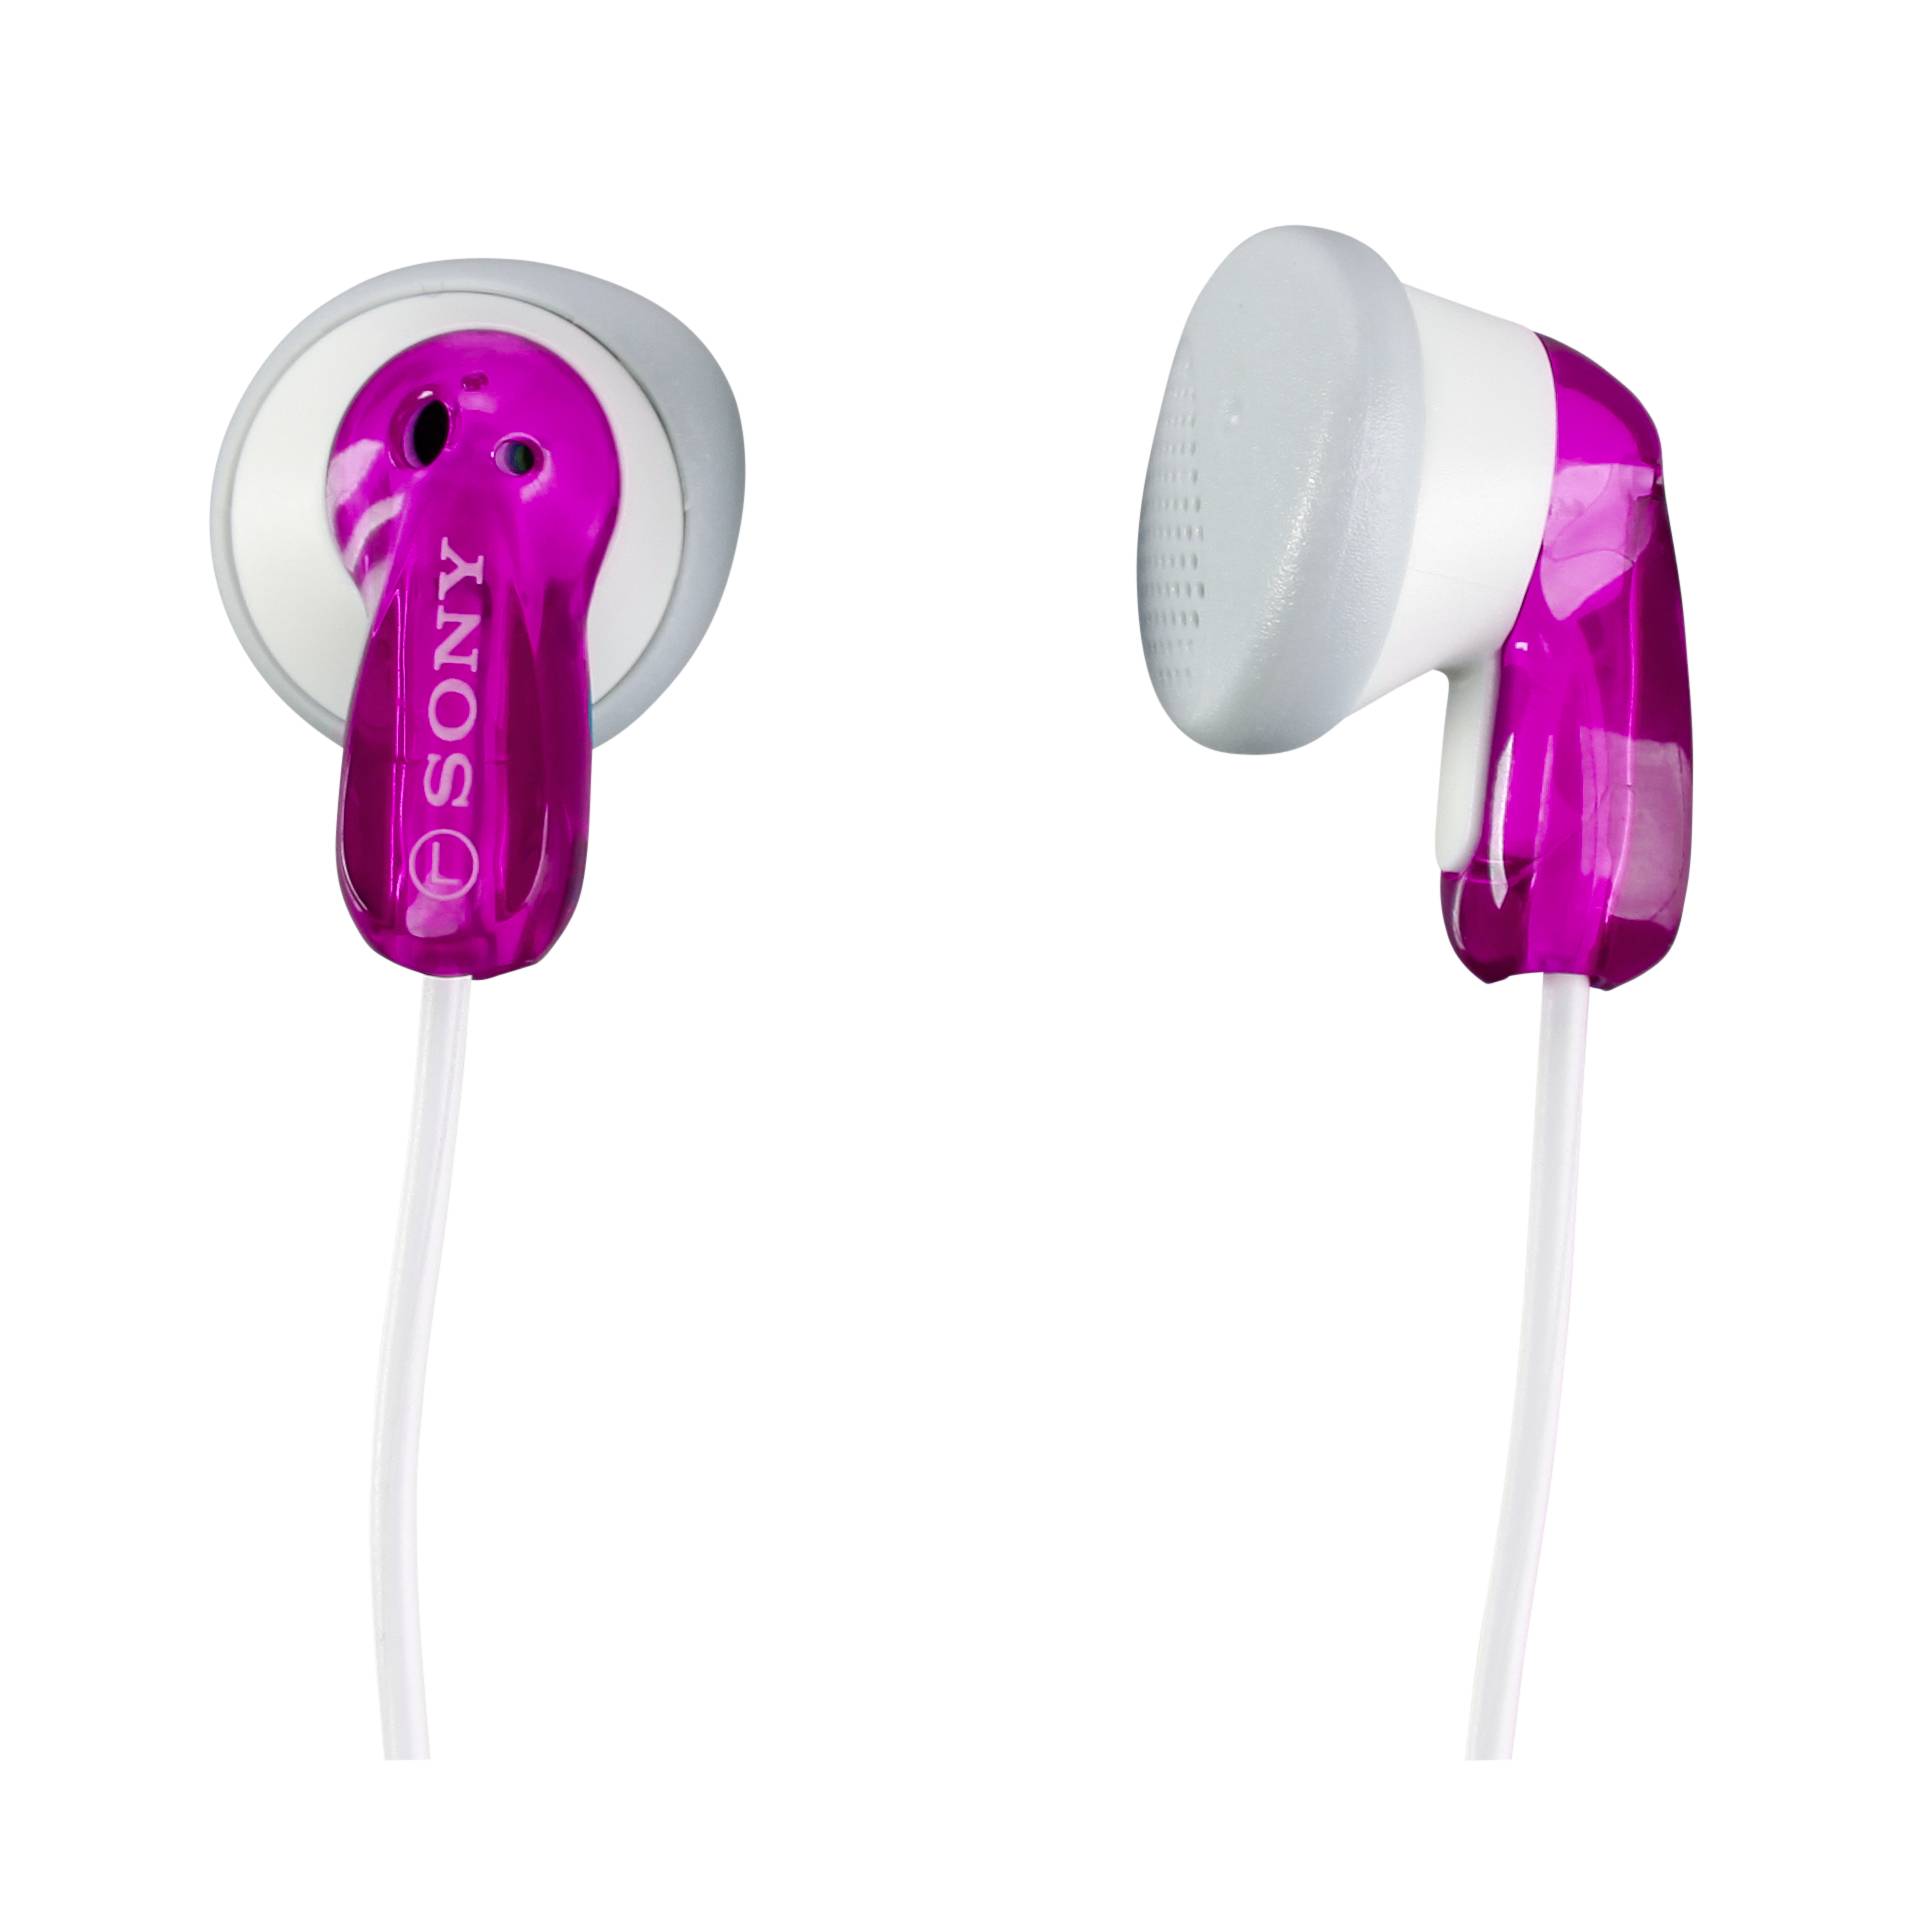 Sony MDR-E9LPP pink, Ohrhörer (Earbuds), Klinkenstecker